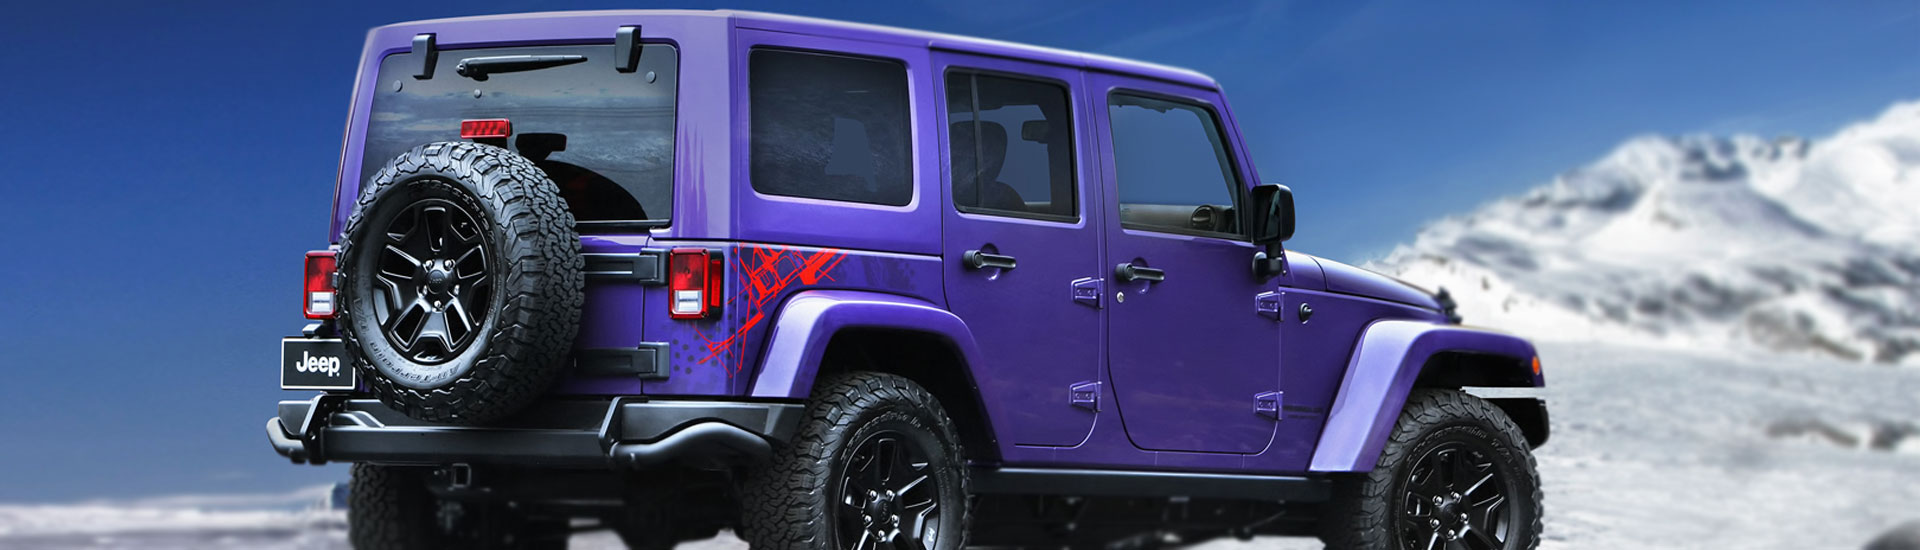 Jeep Patriot Window Tint